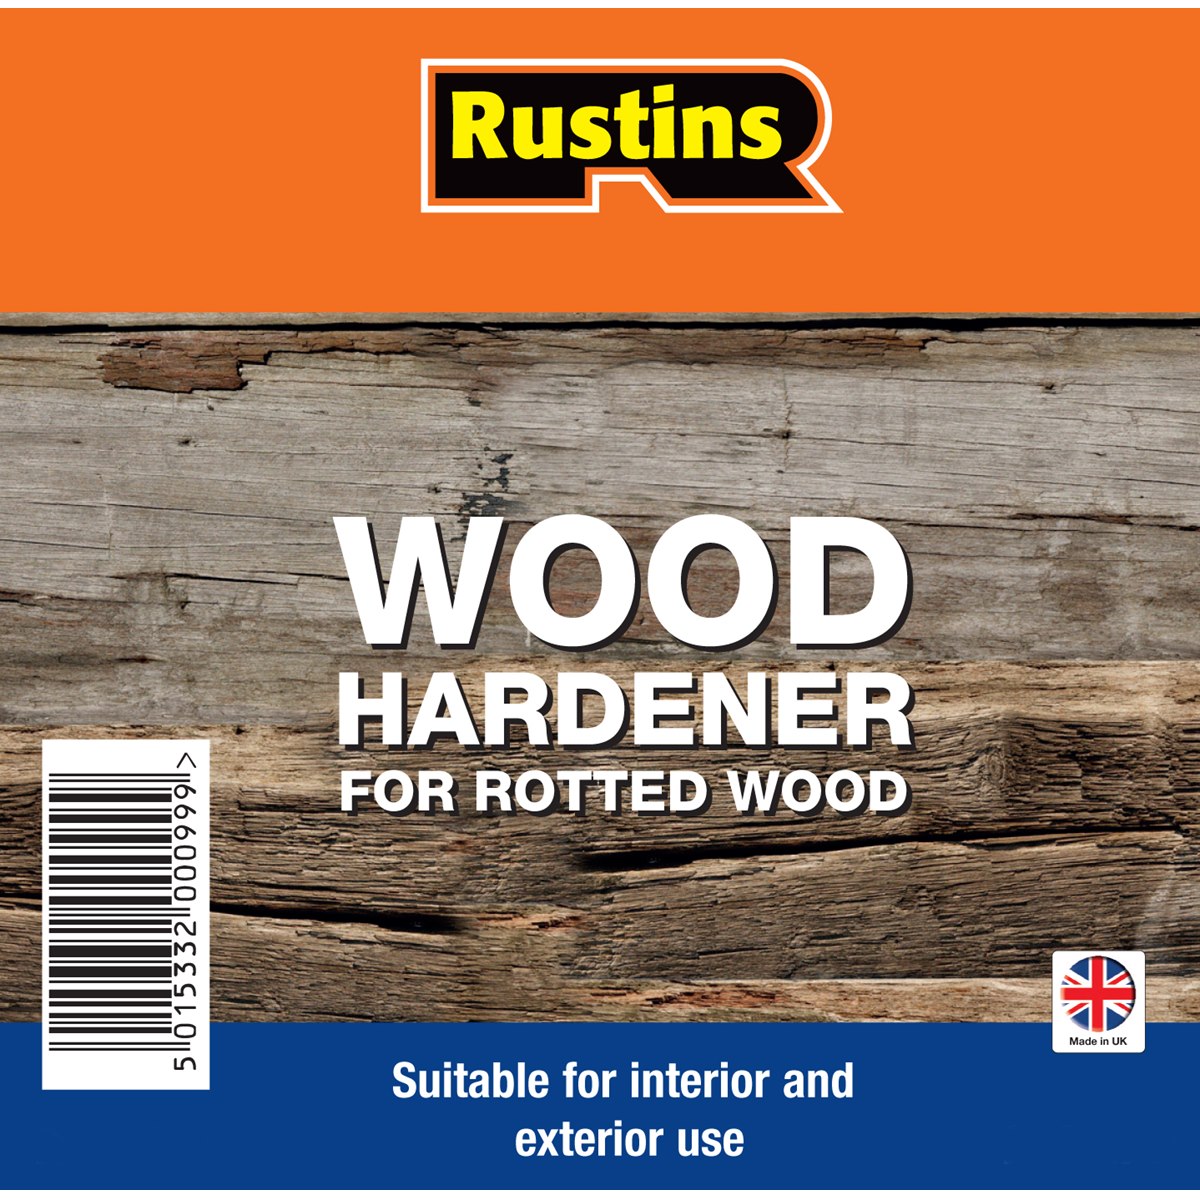 Where to Buy Rustins Wood Hardener